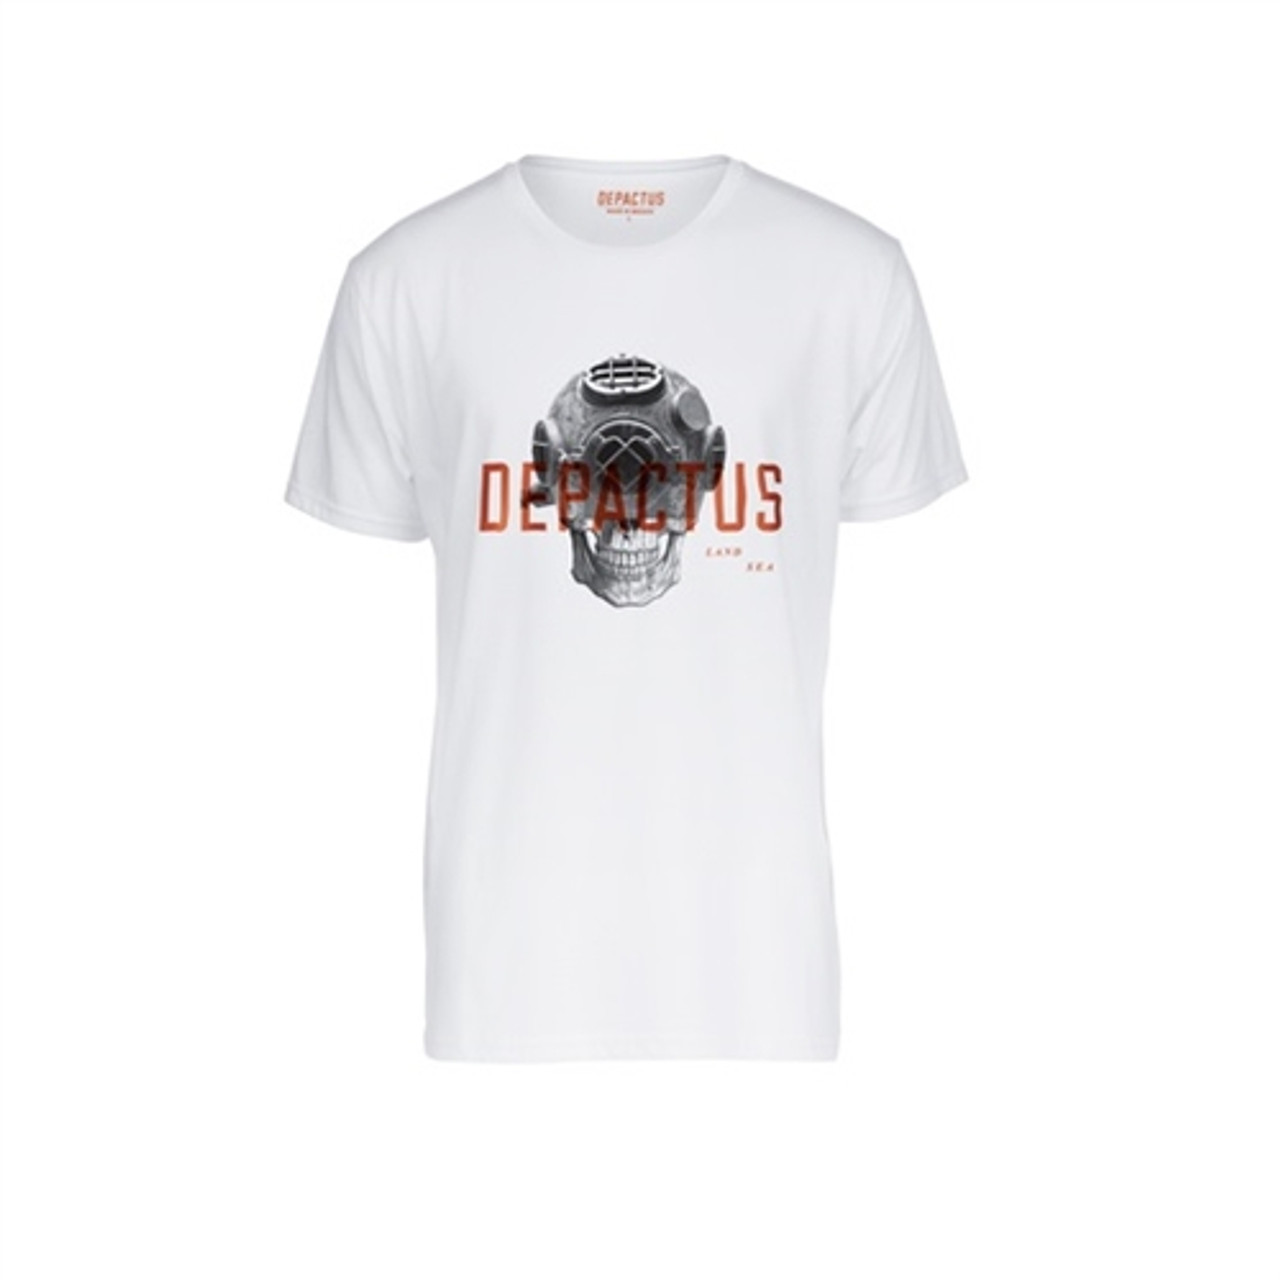 Depactus Skull Tshirt White